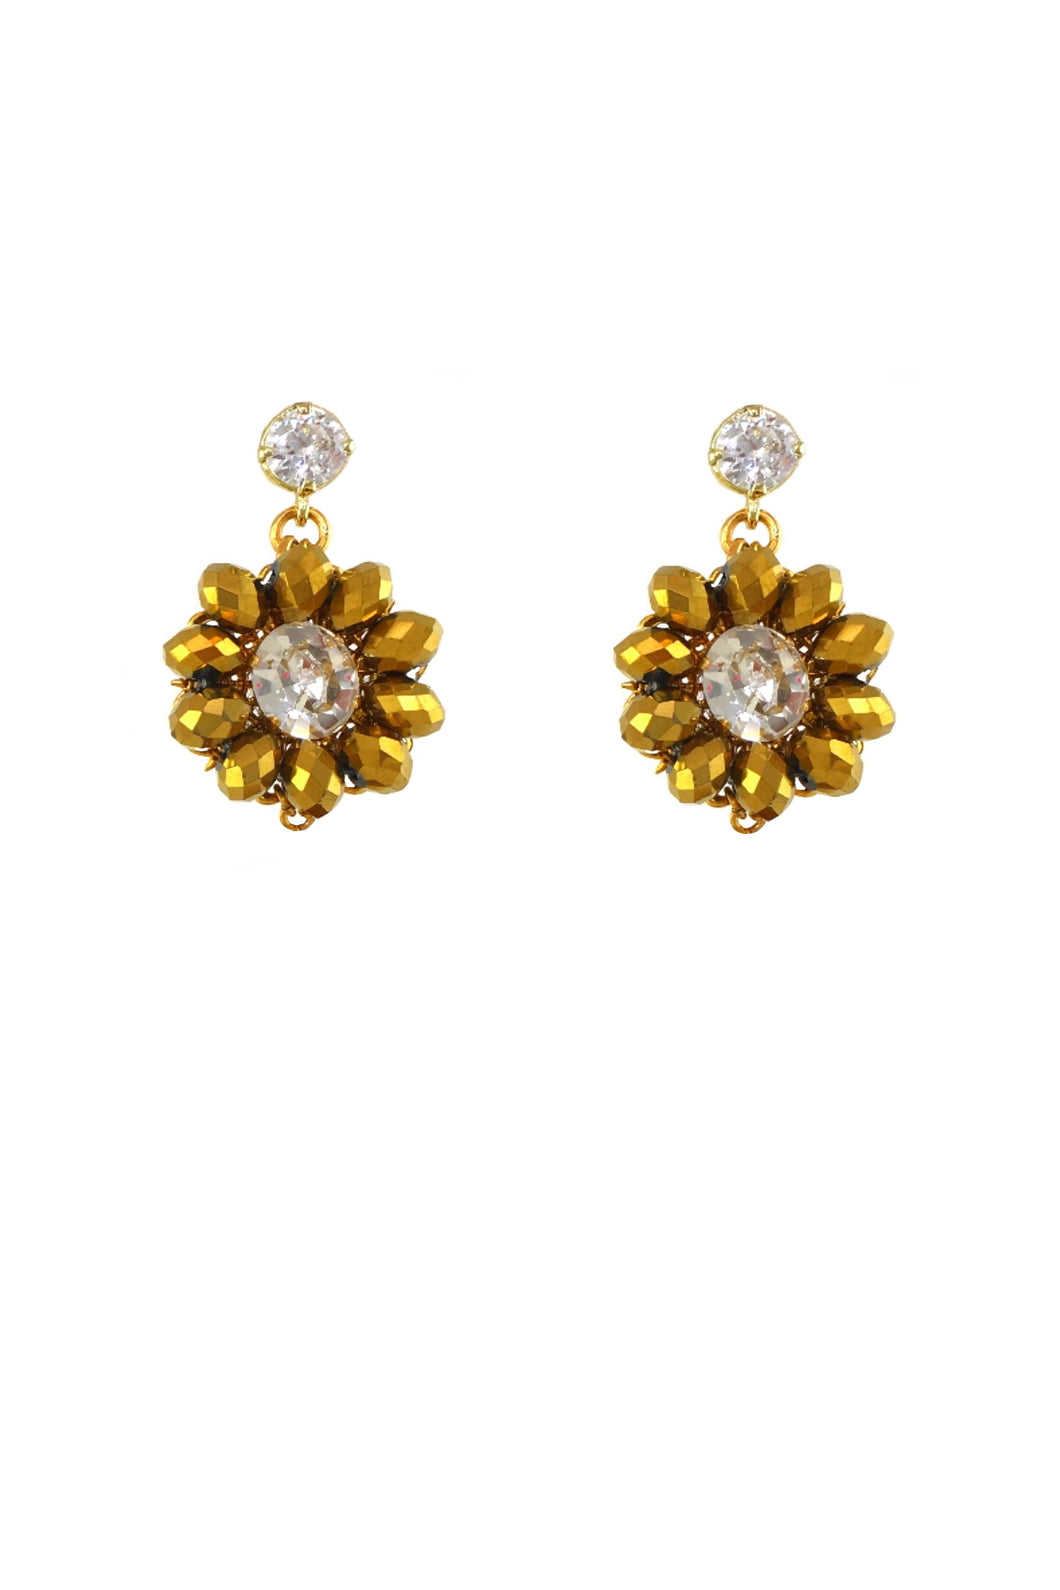 SALE - Crystal gold flower earrings